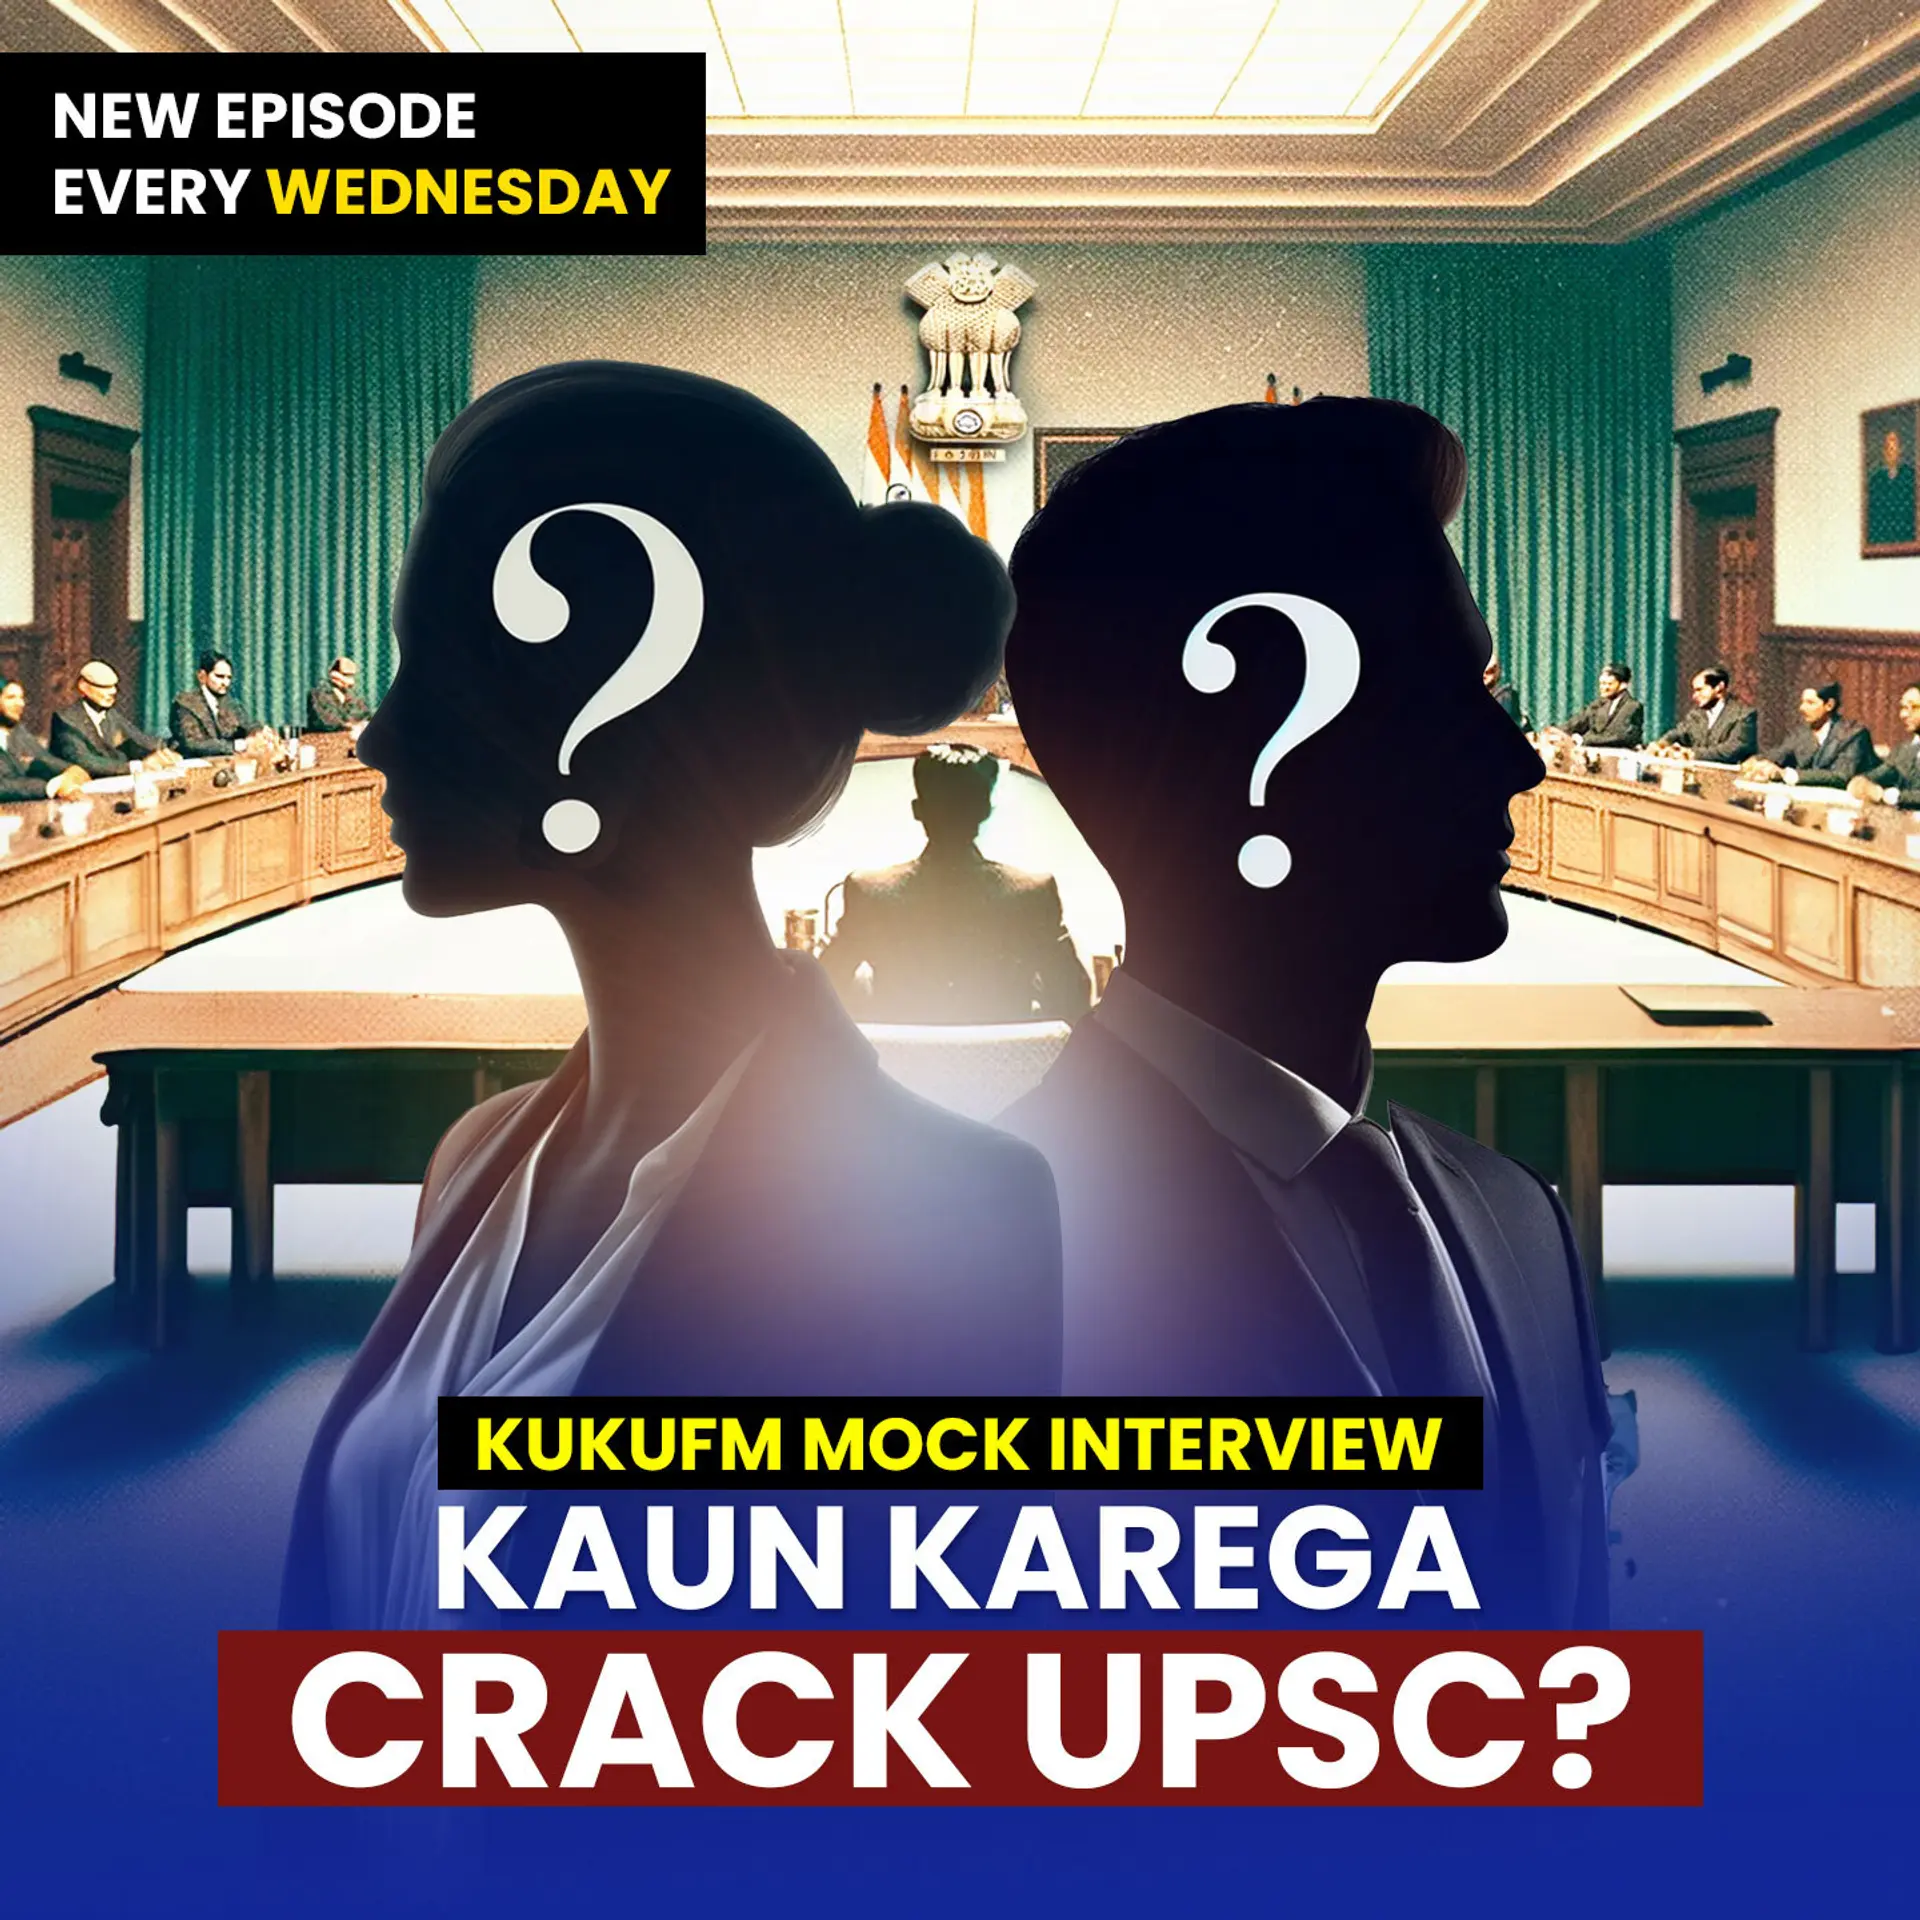 Kaun Karega Crack UPSC?